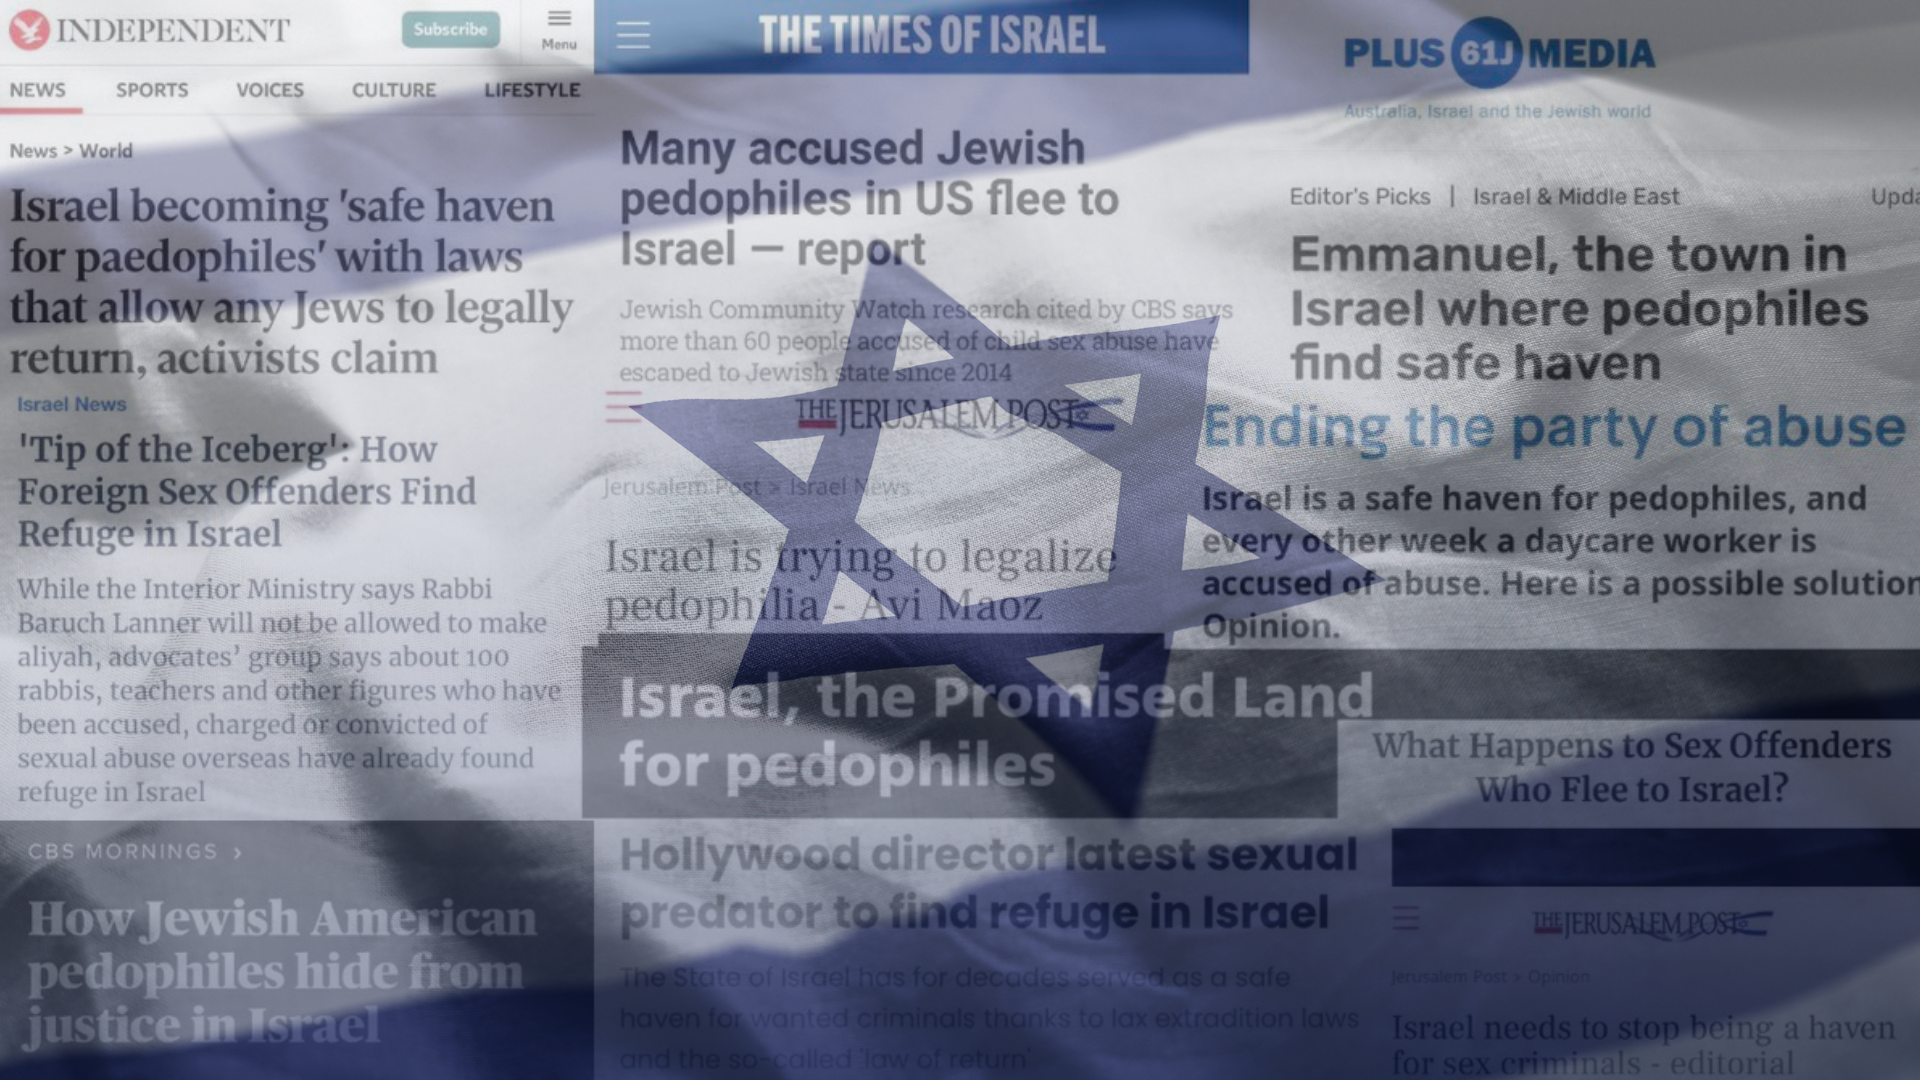 Israel: A Safe Haven for Pedophiles